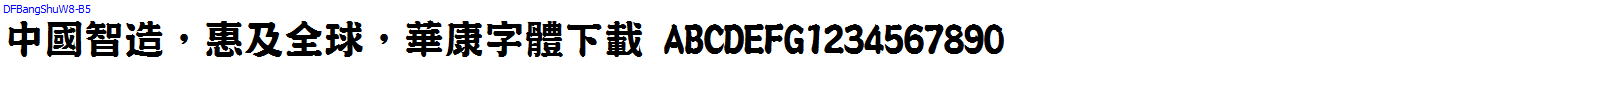 華康字體DFBangShuW8-B5.TTF